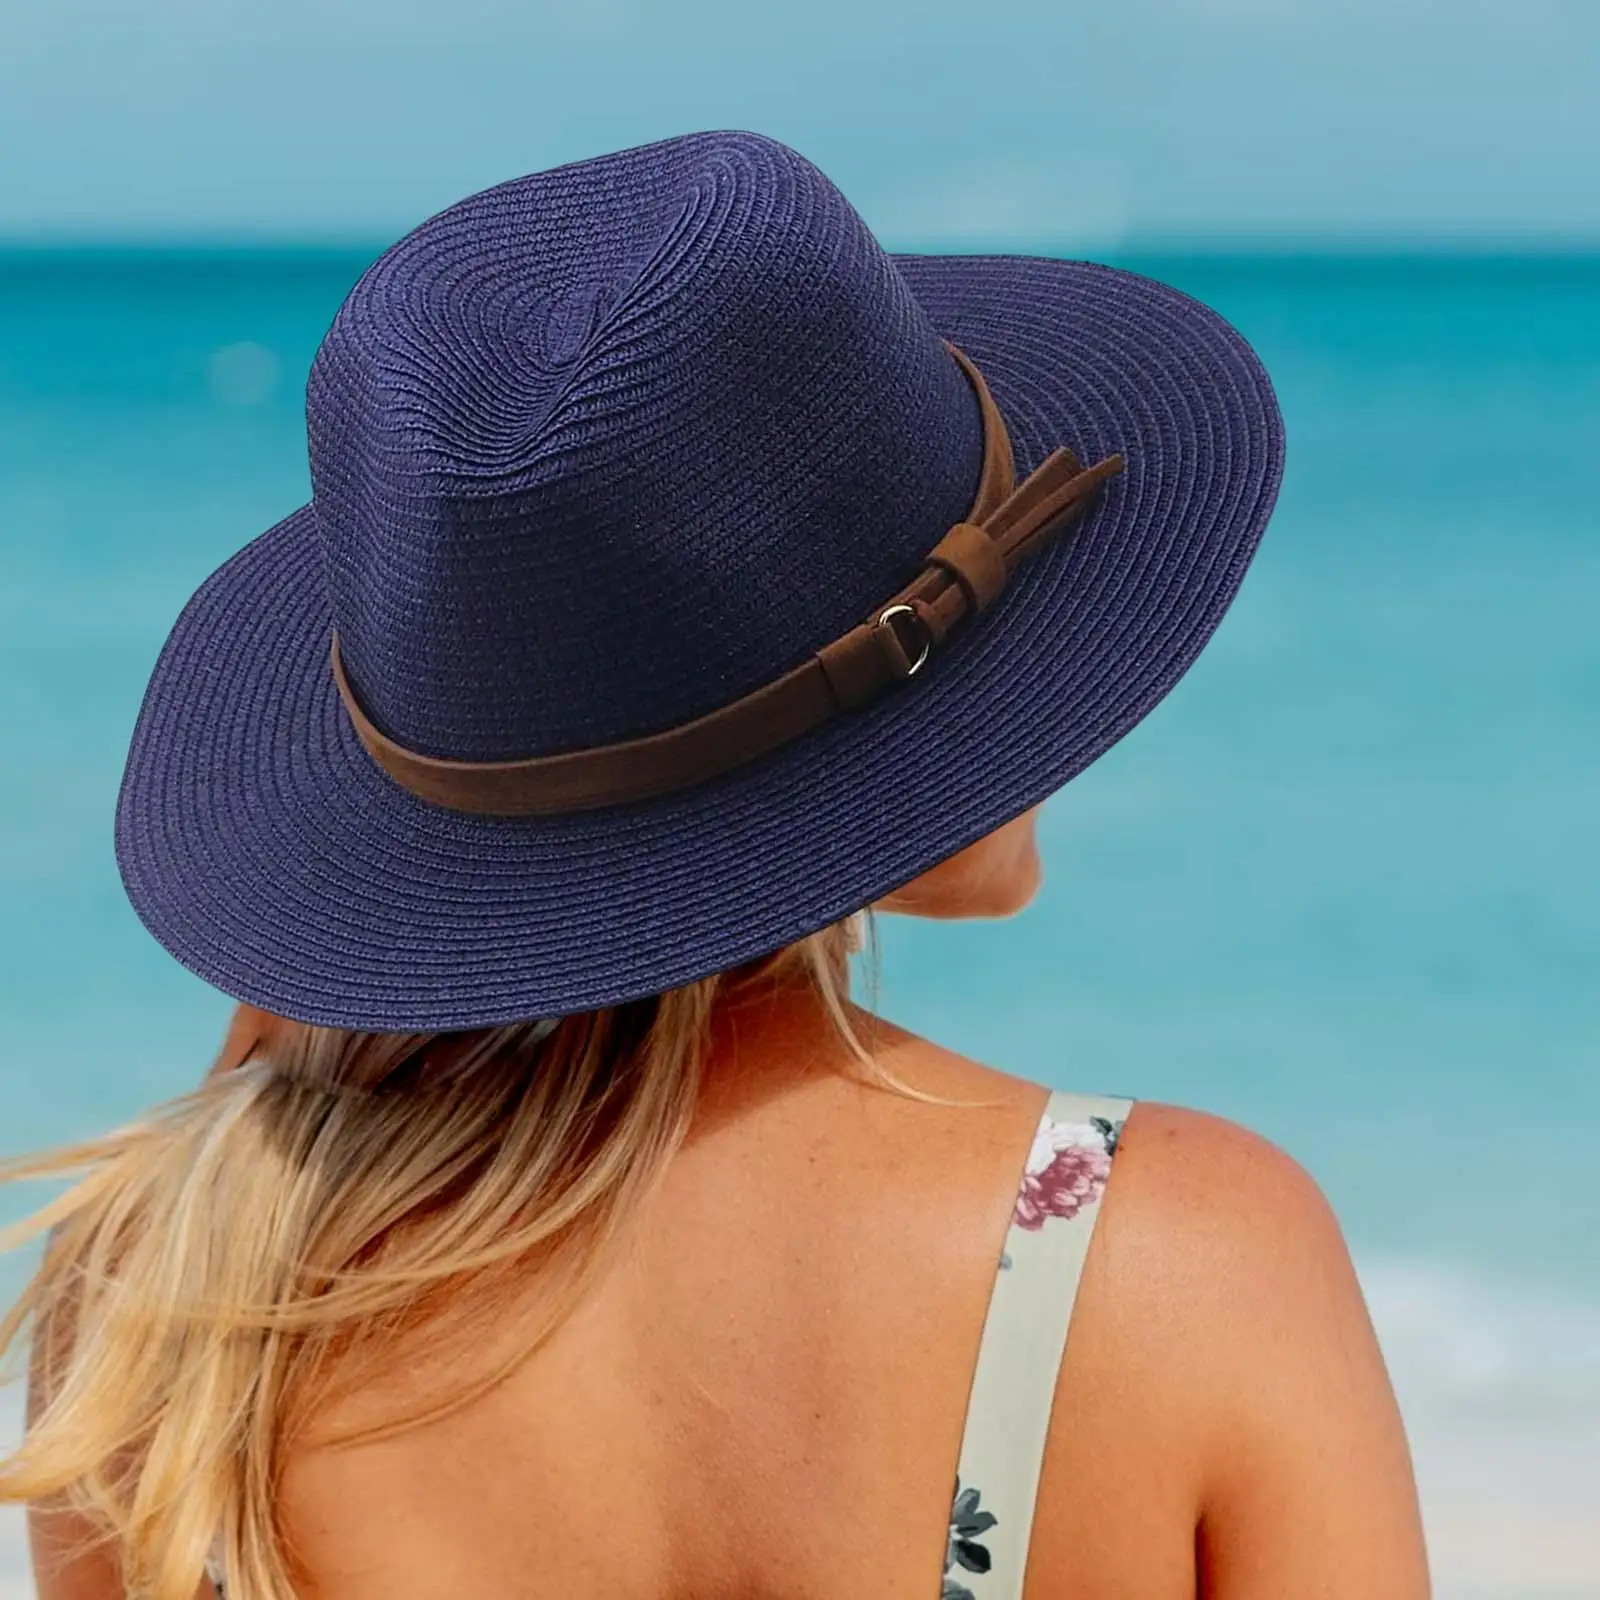 Unisex Wide Brim Sun Hat Panama Sunhats Sun Visor Fashionable Beach Bohemia Straw Hats for Outdoor Travel Camping Holiday Hiking